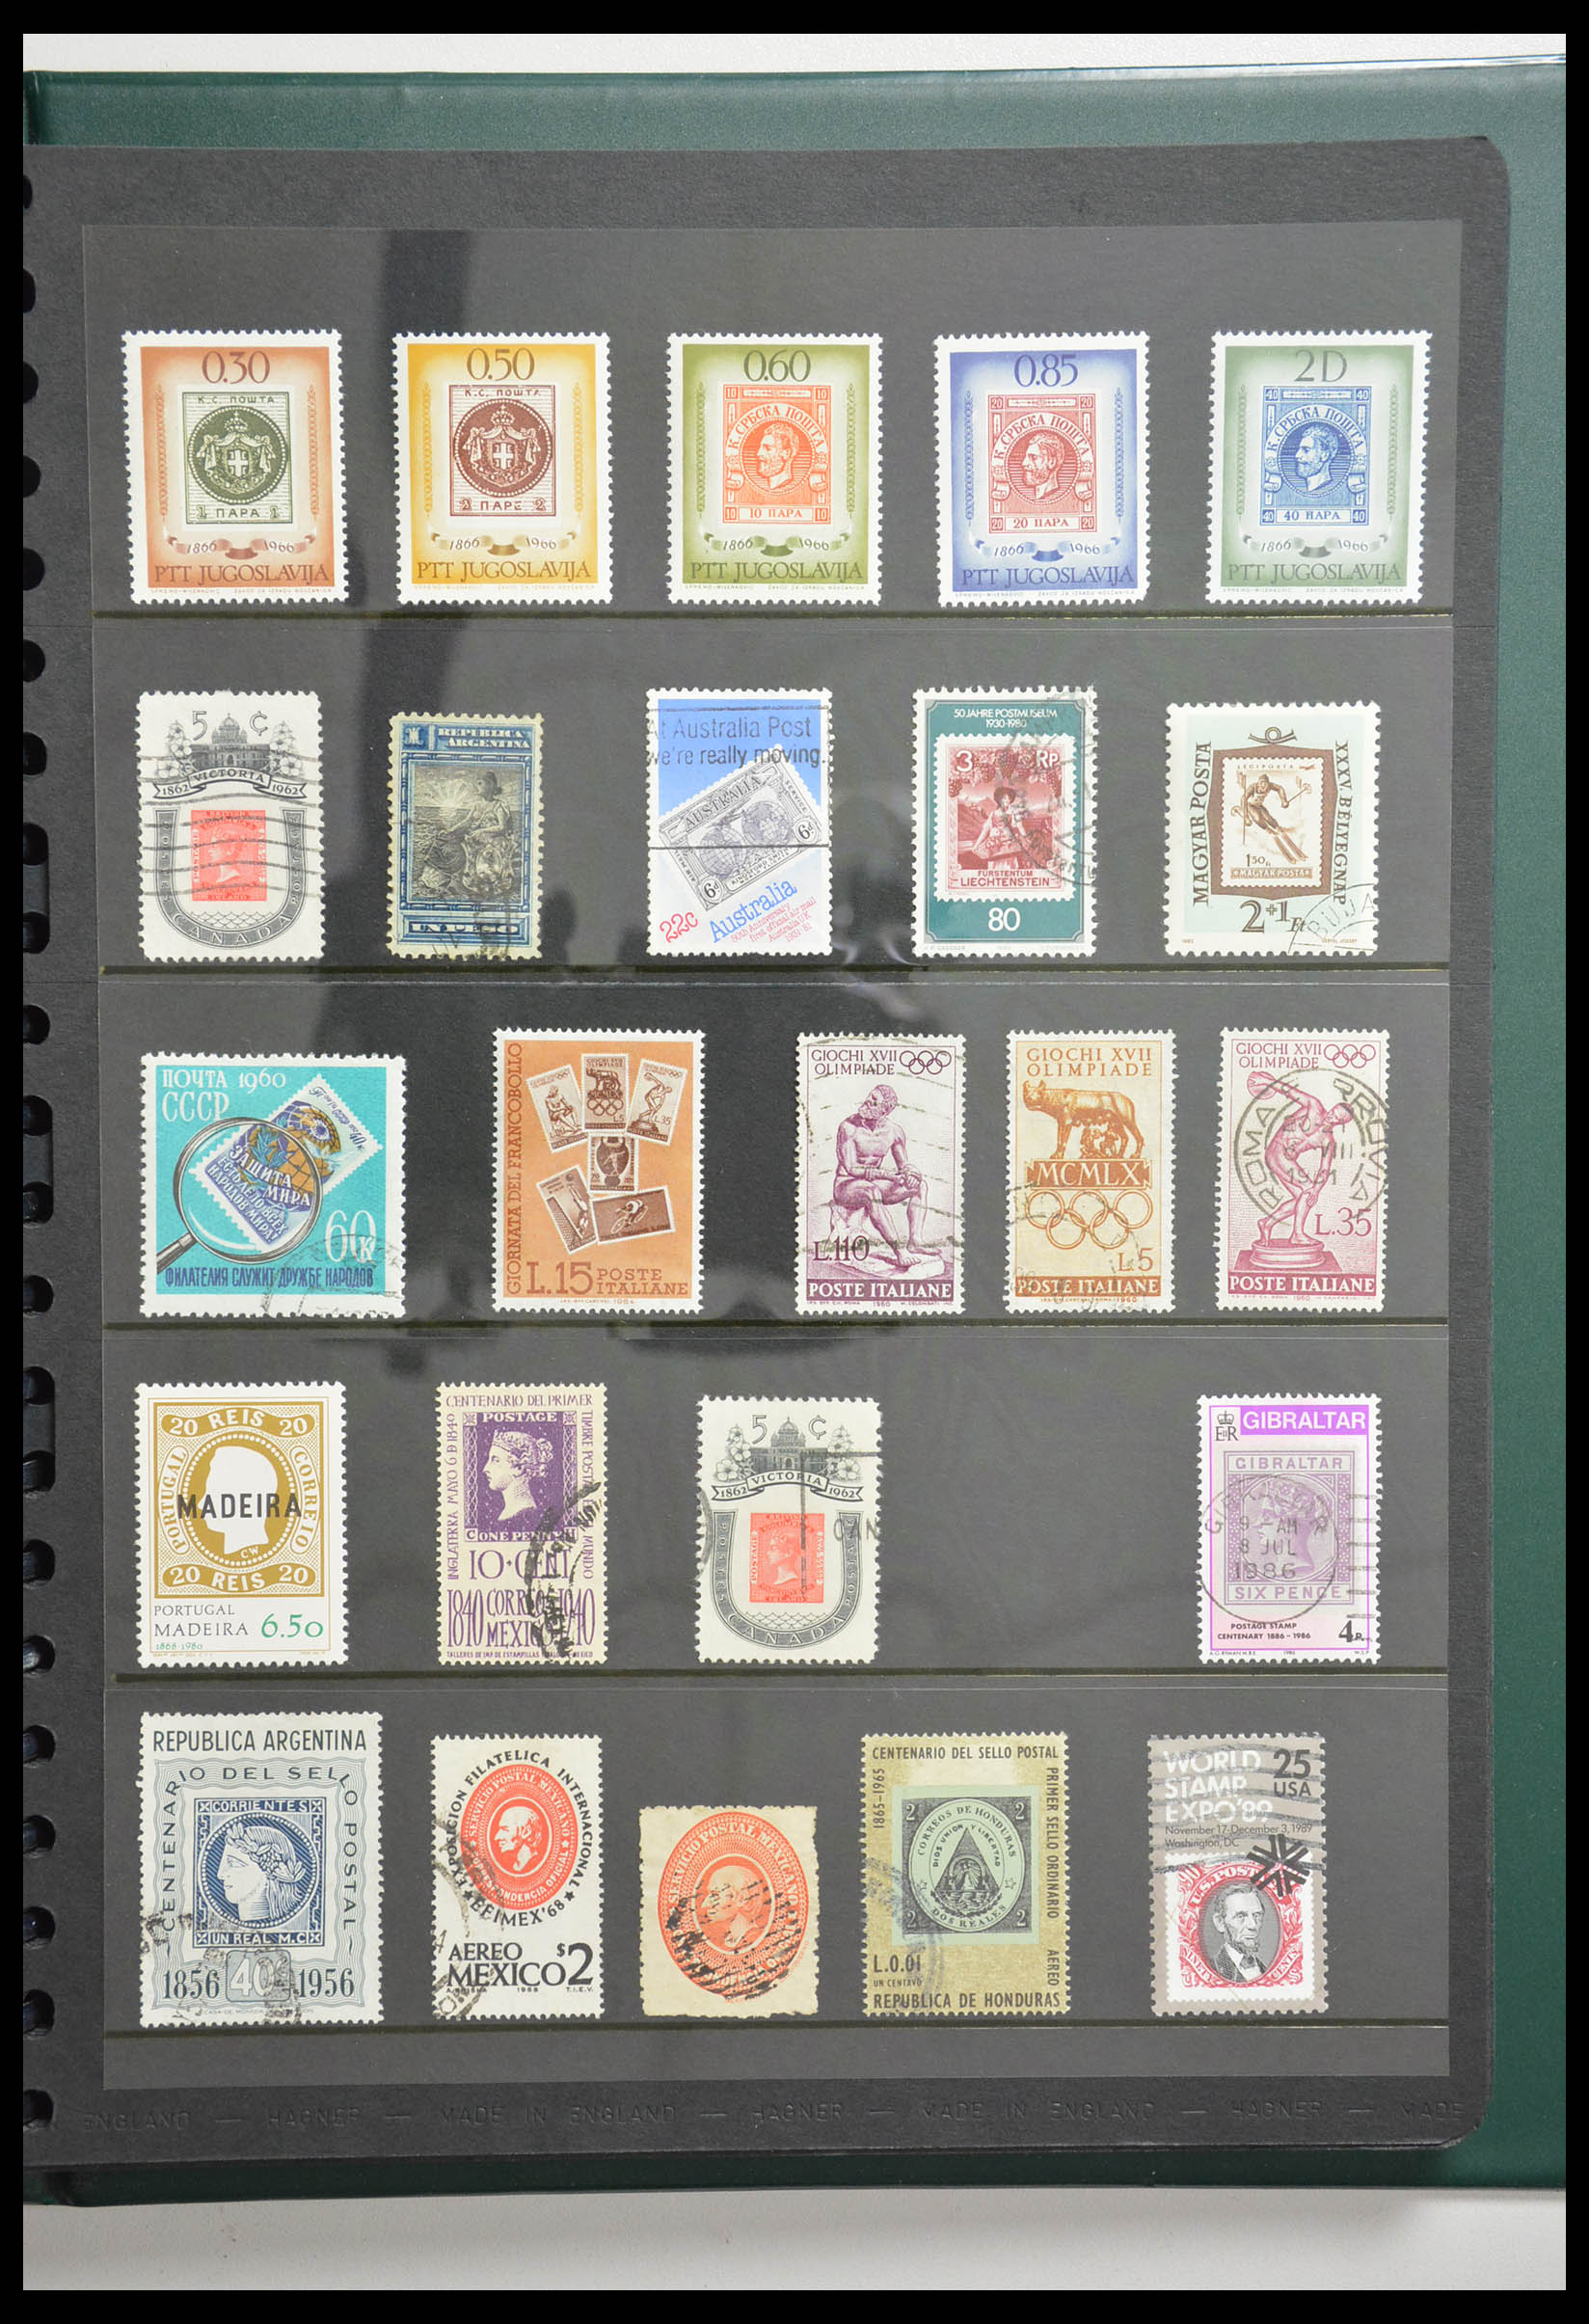 28337 066 - 28337 Postzegel op postzegel 1840-2001.